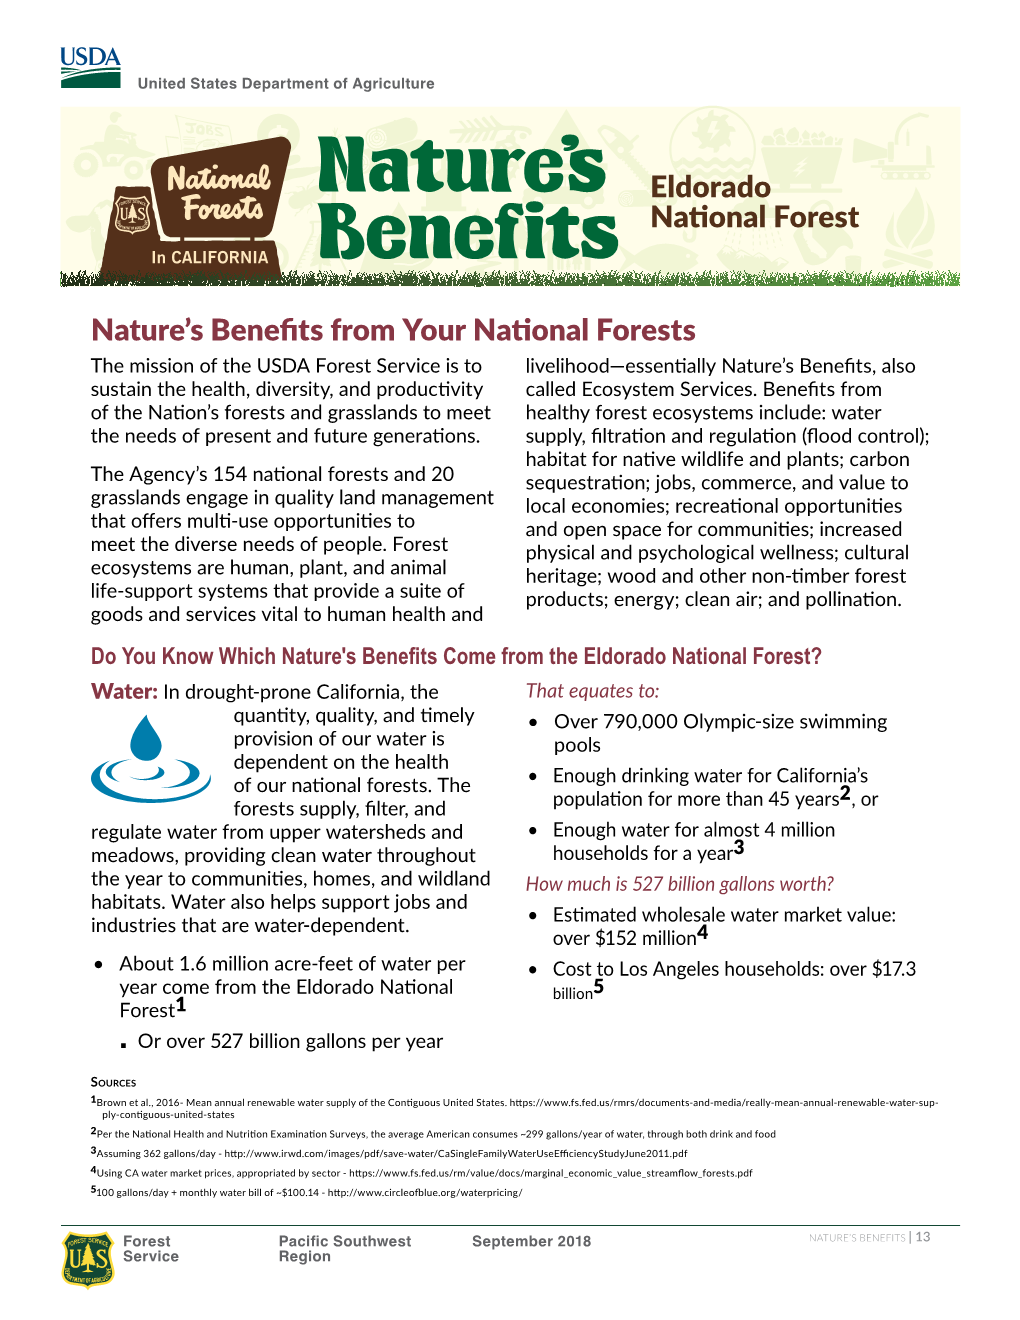 Eldorado National Forest Facts Sheet